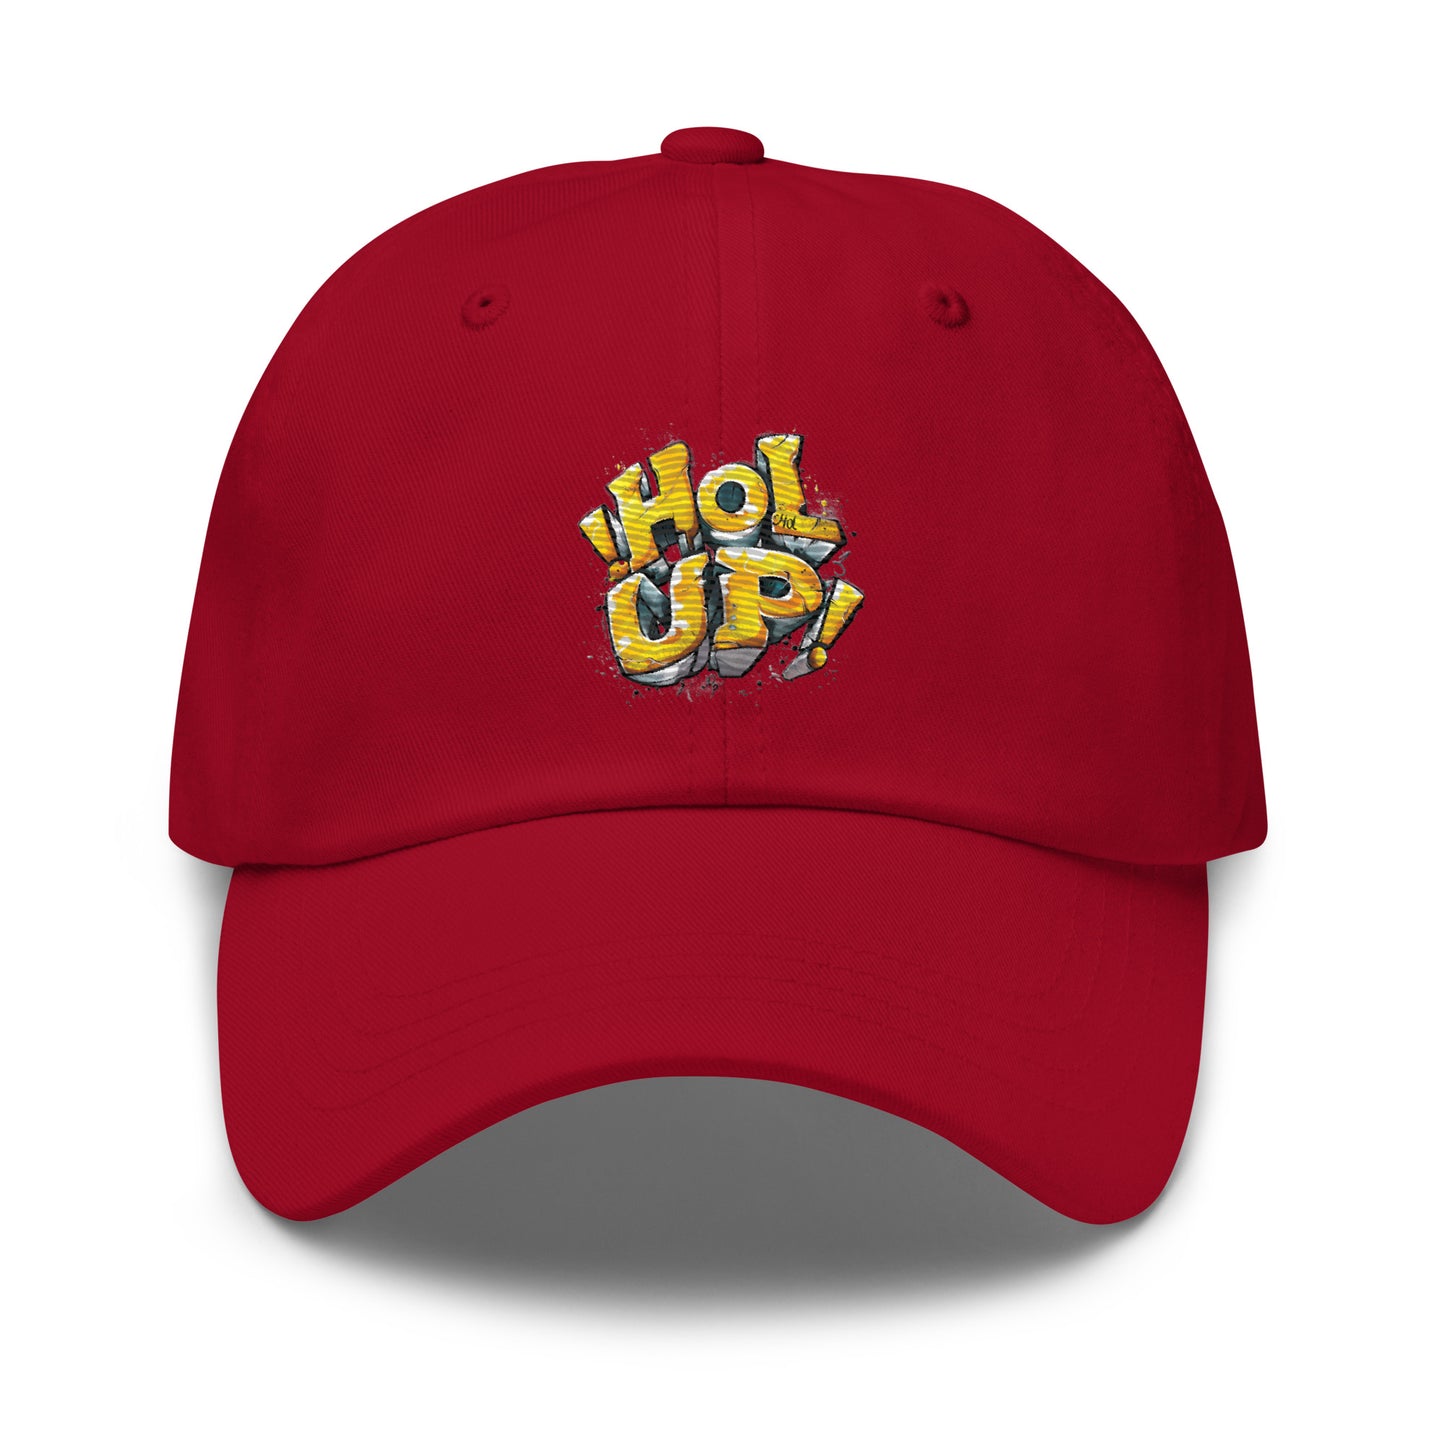 Hol Up! - Dad hat